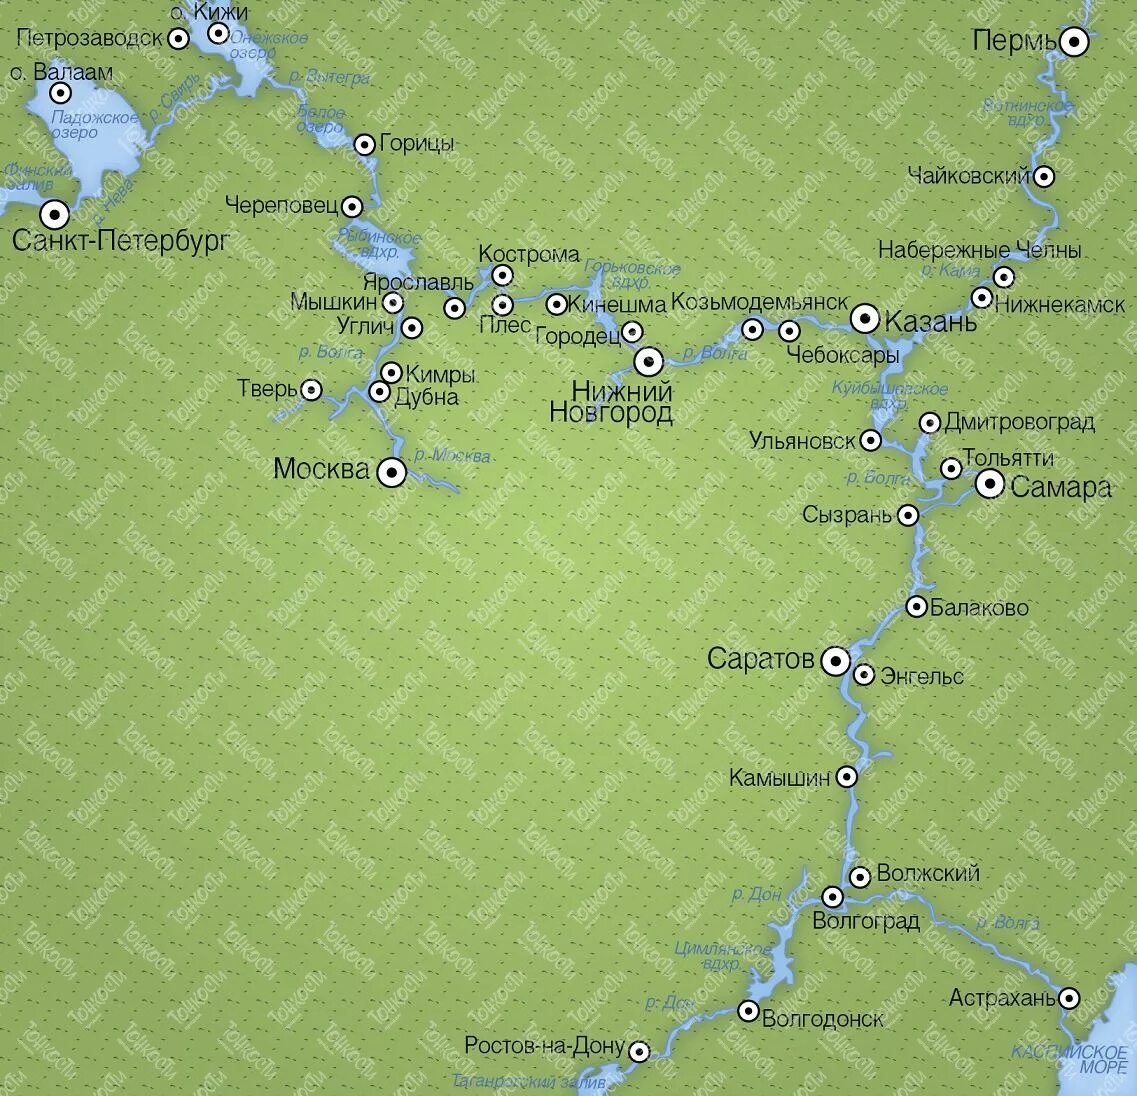 Река тура на карте россии. Маршрут реки Волга. Маршрут путешествия по Волге. Туристический маршрут по Волге. Маршрут по реке Волге.